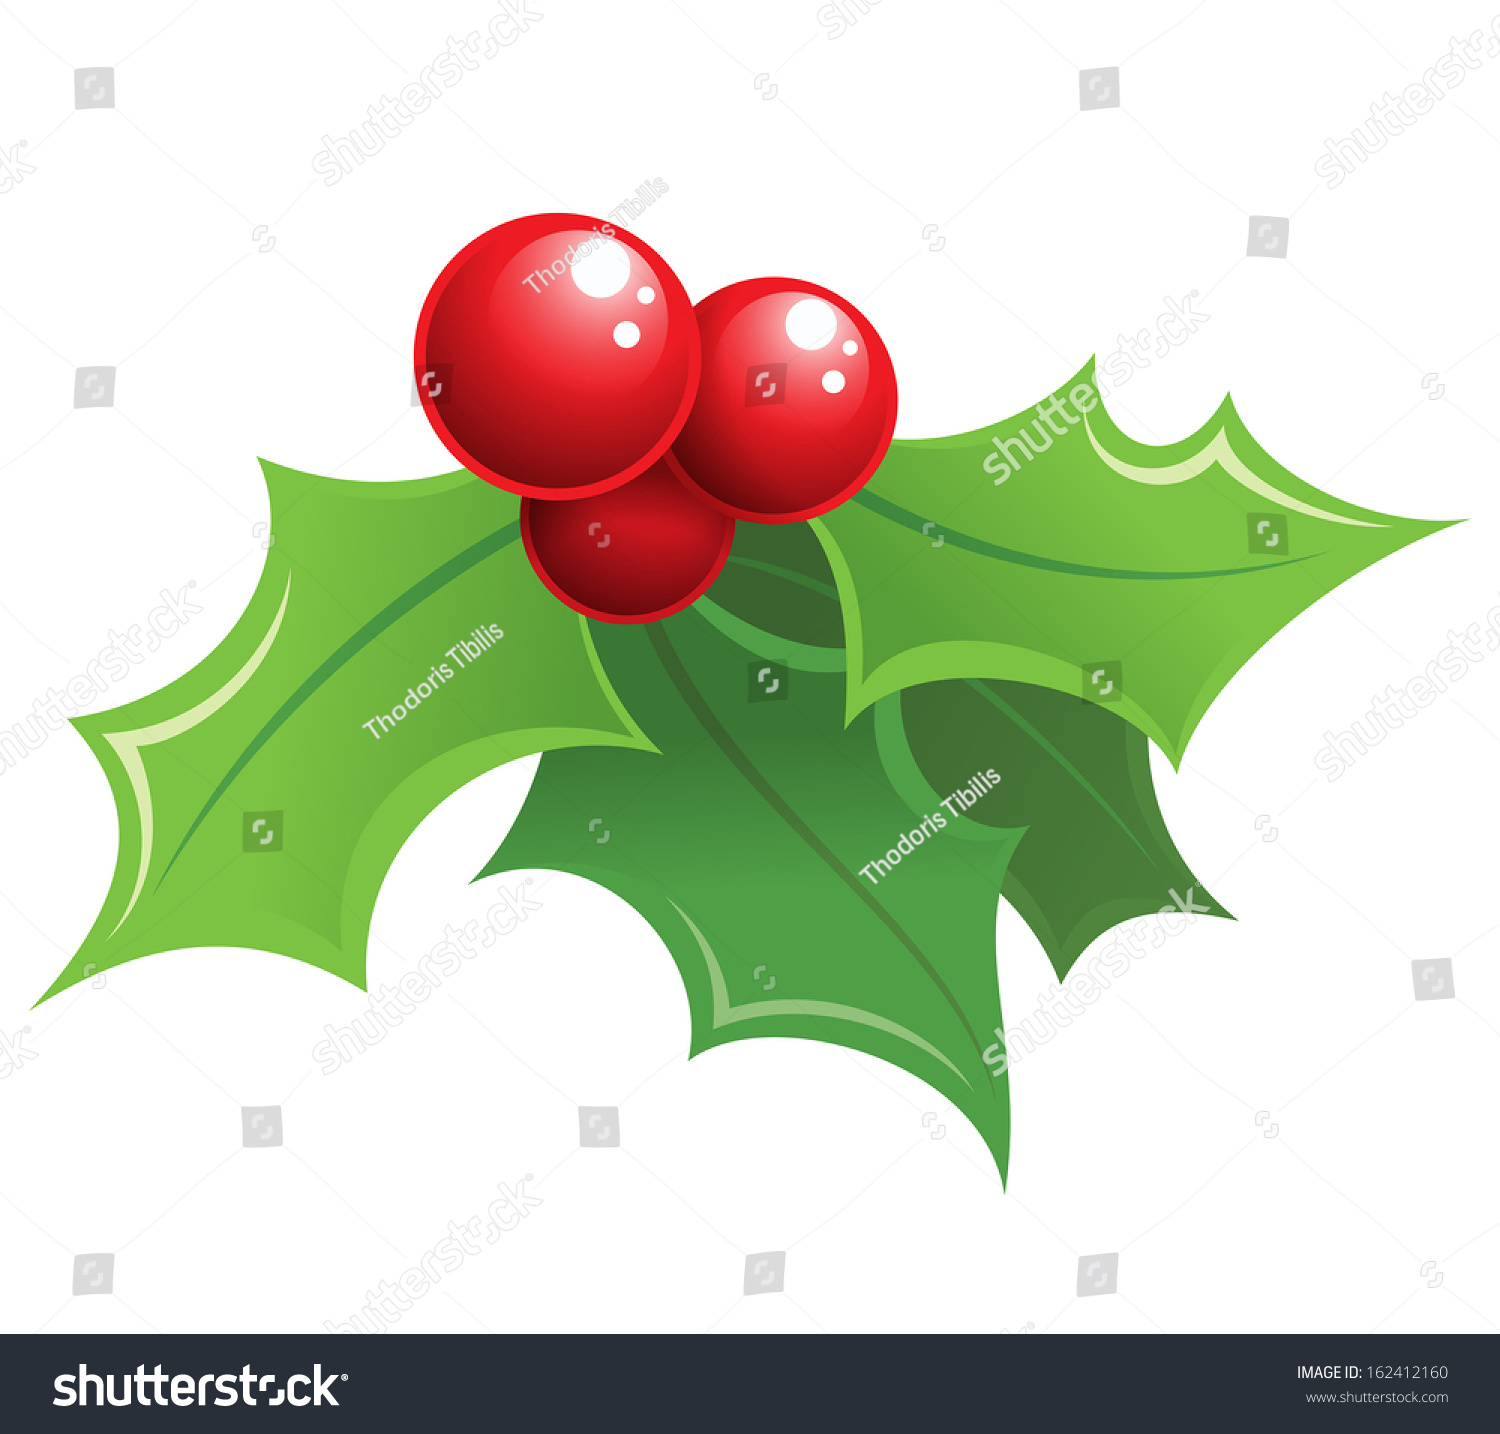 Cartoon Shiny Christmas Mistletoe Decorative Red And Green Ornament ...